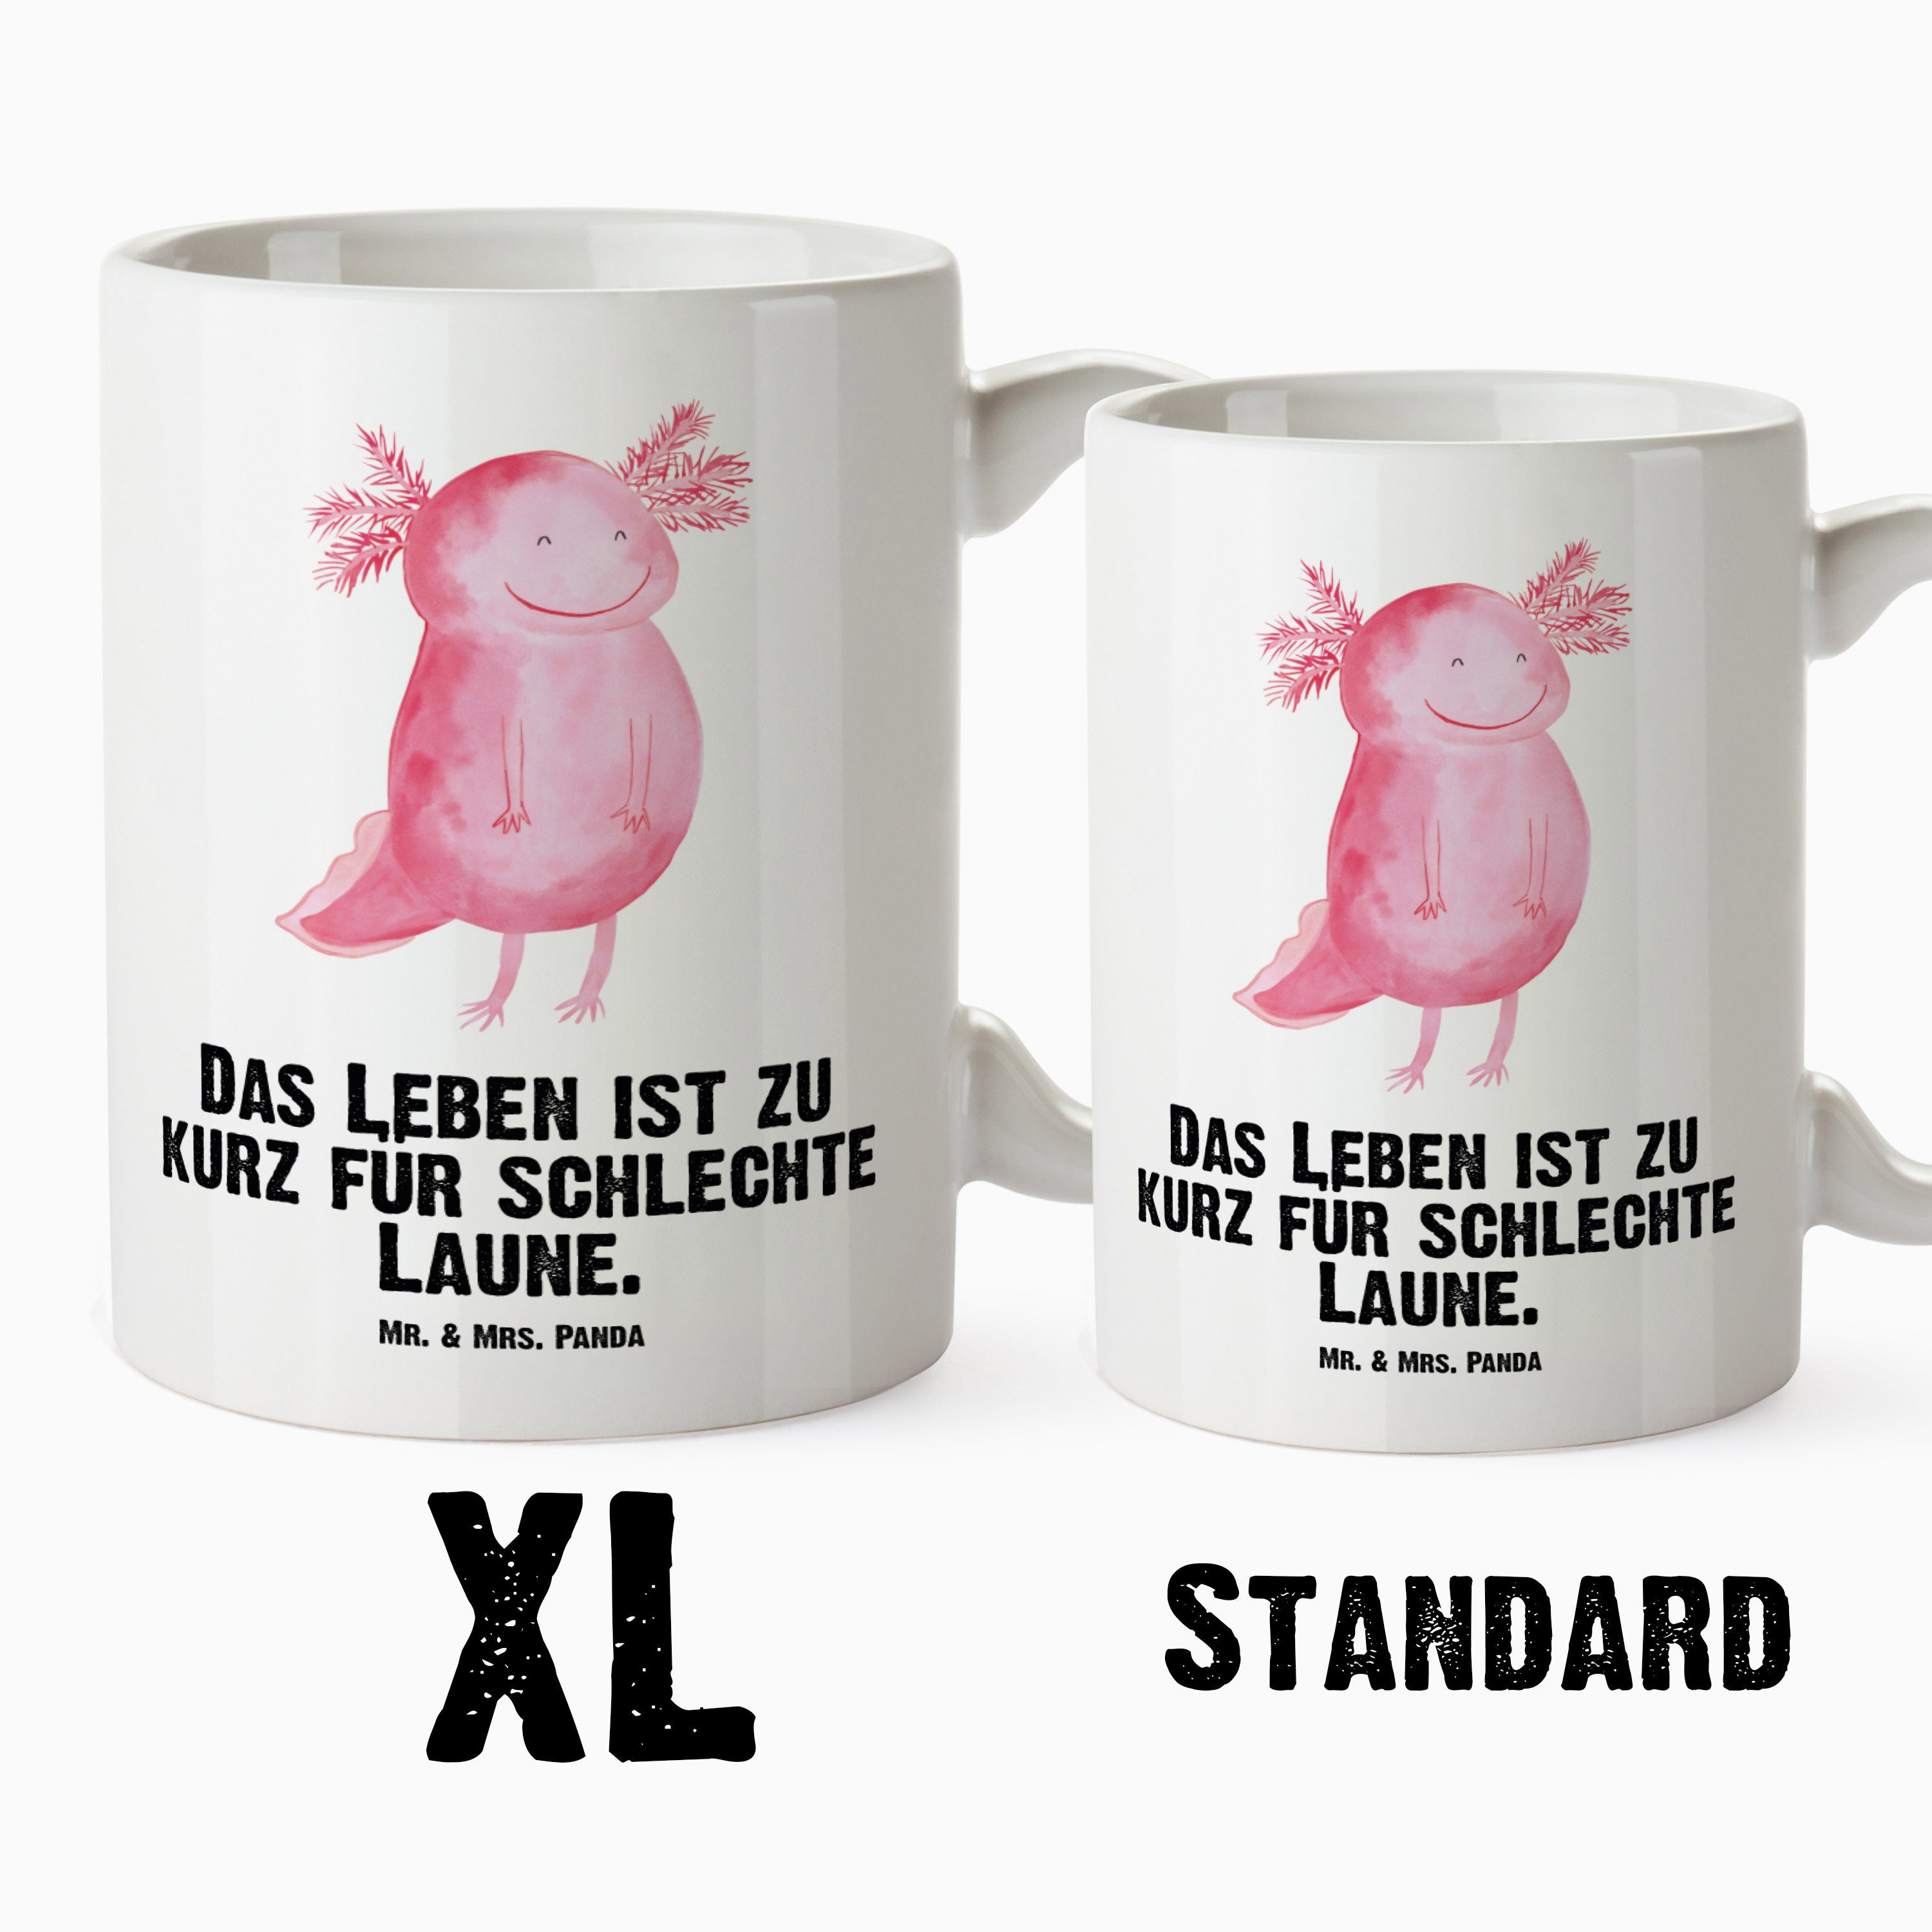 Mr. & Mrs. Weiß glücklich Kaffeetasse, Tasse Axolotl Panda Geschenk, Lurch, Jumbo, Keramik Tasse - XL - Grosse